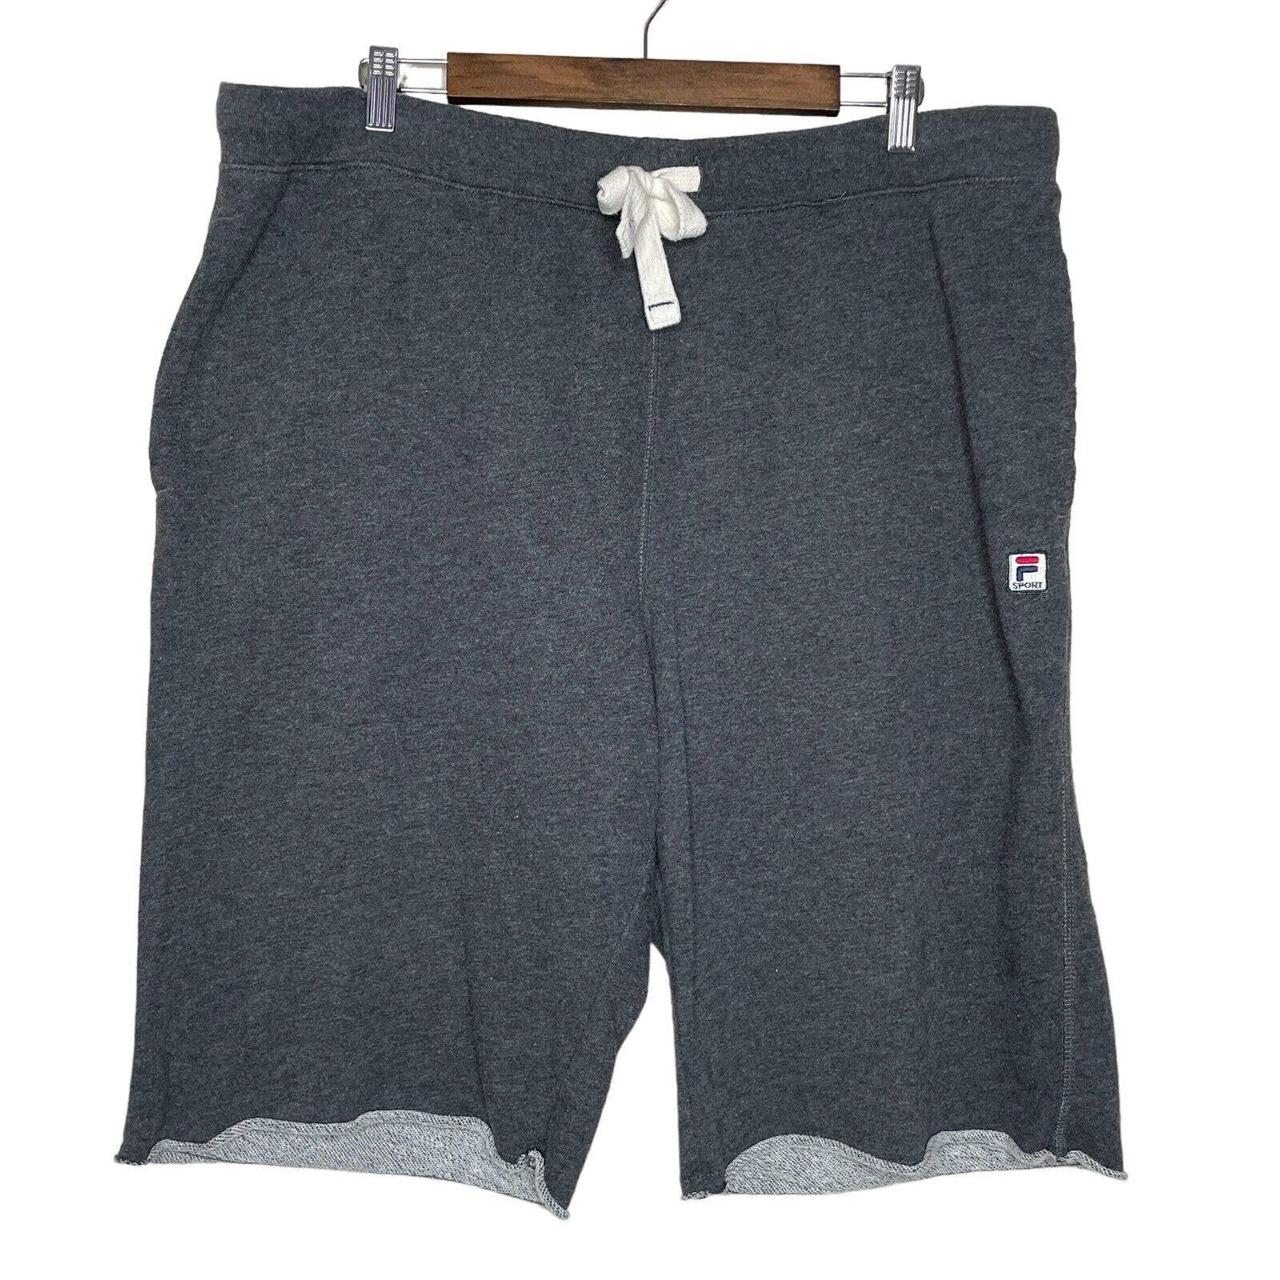 Lucky Brand Medium Active Shorts for Men